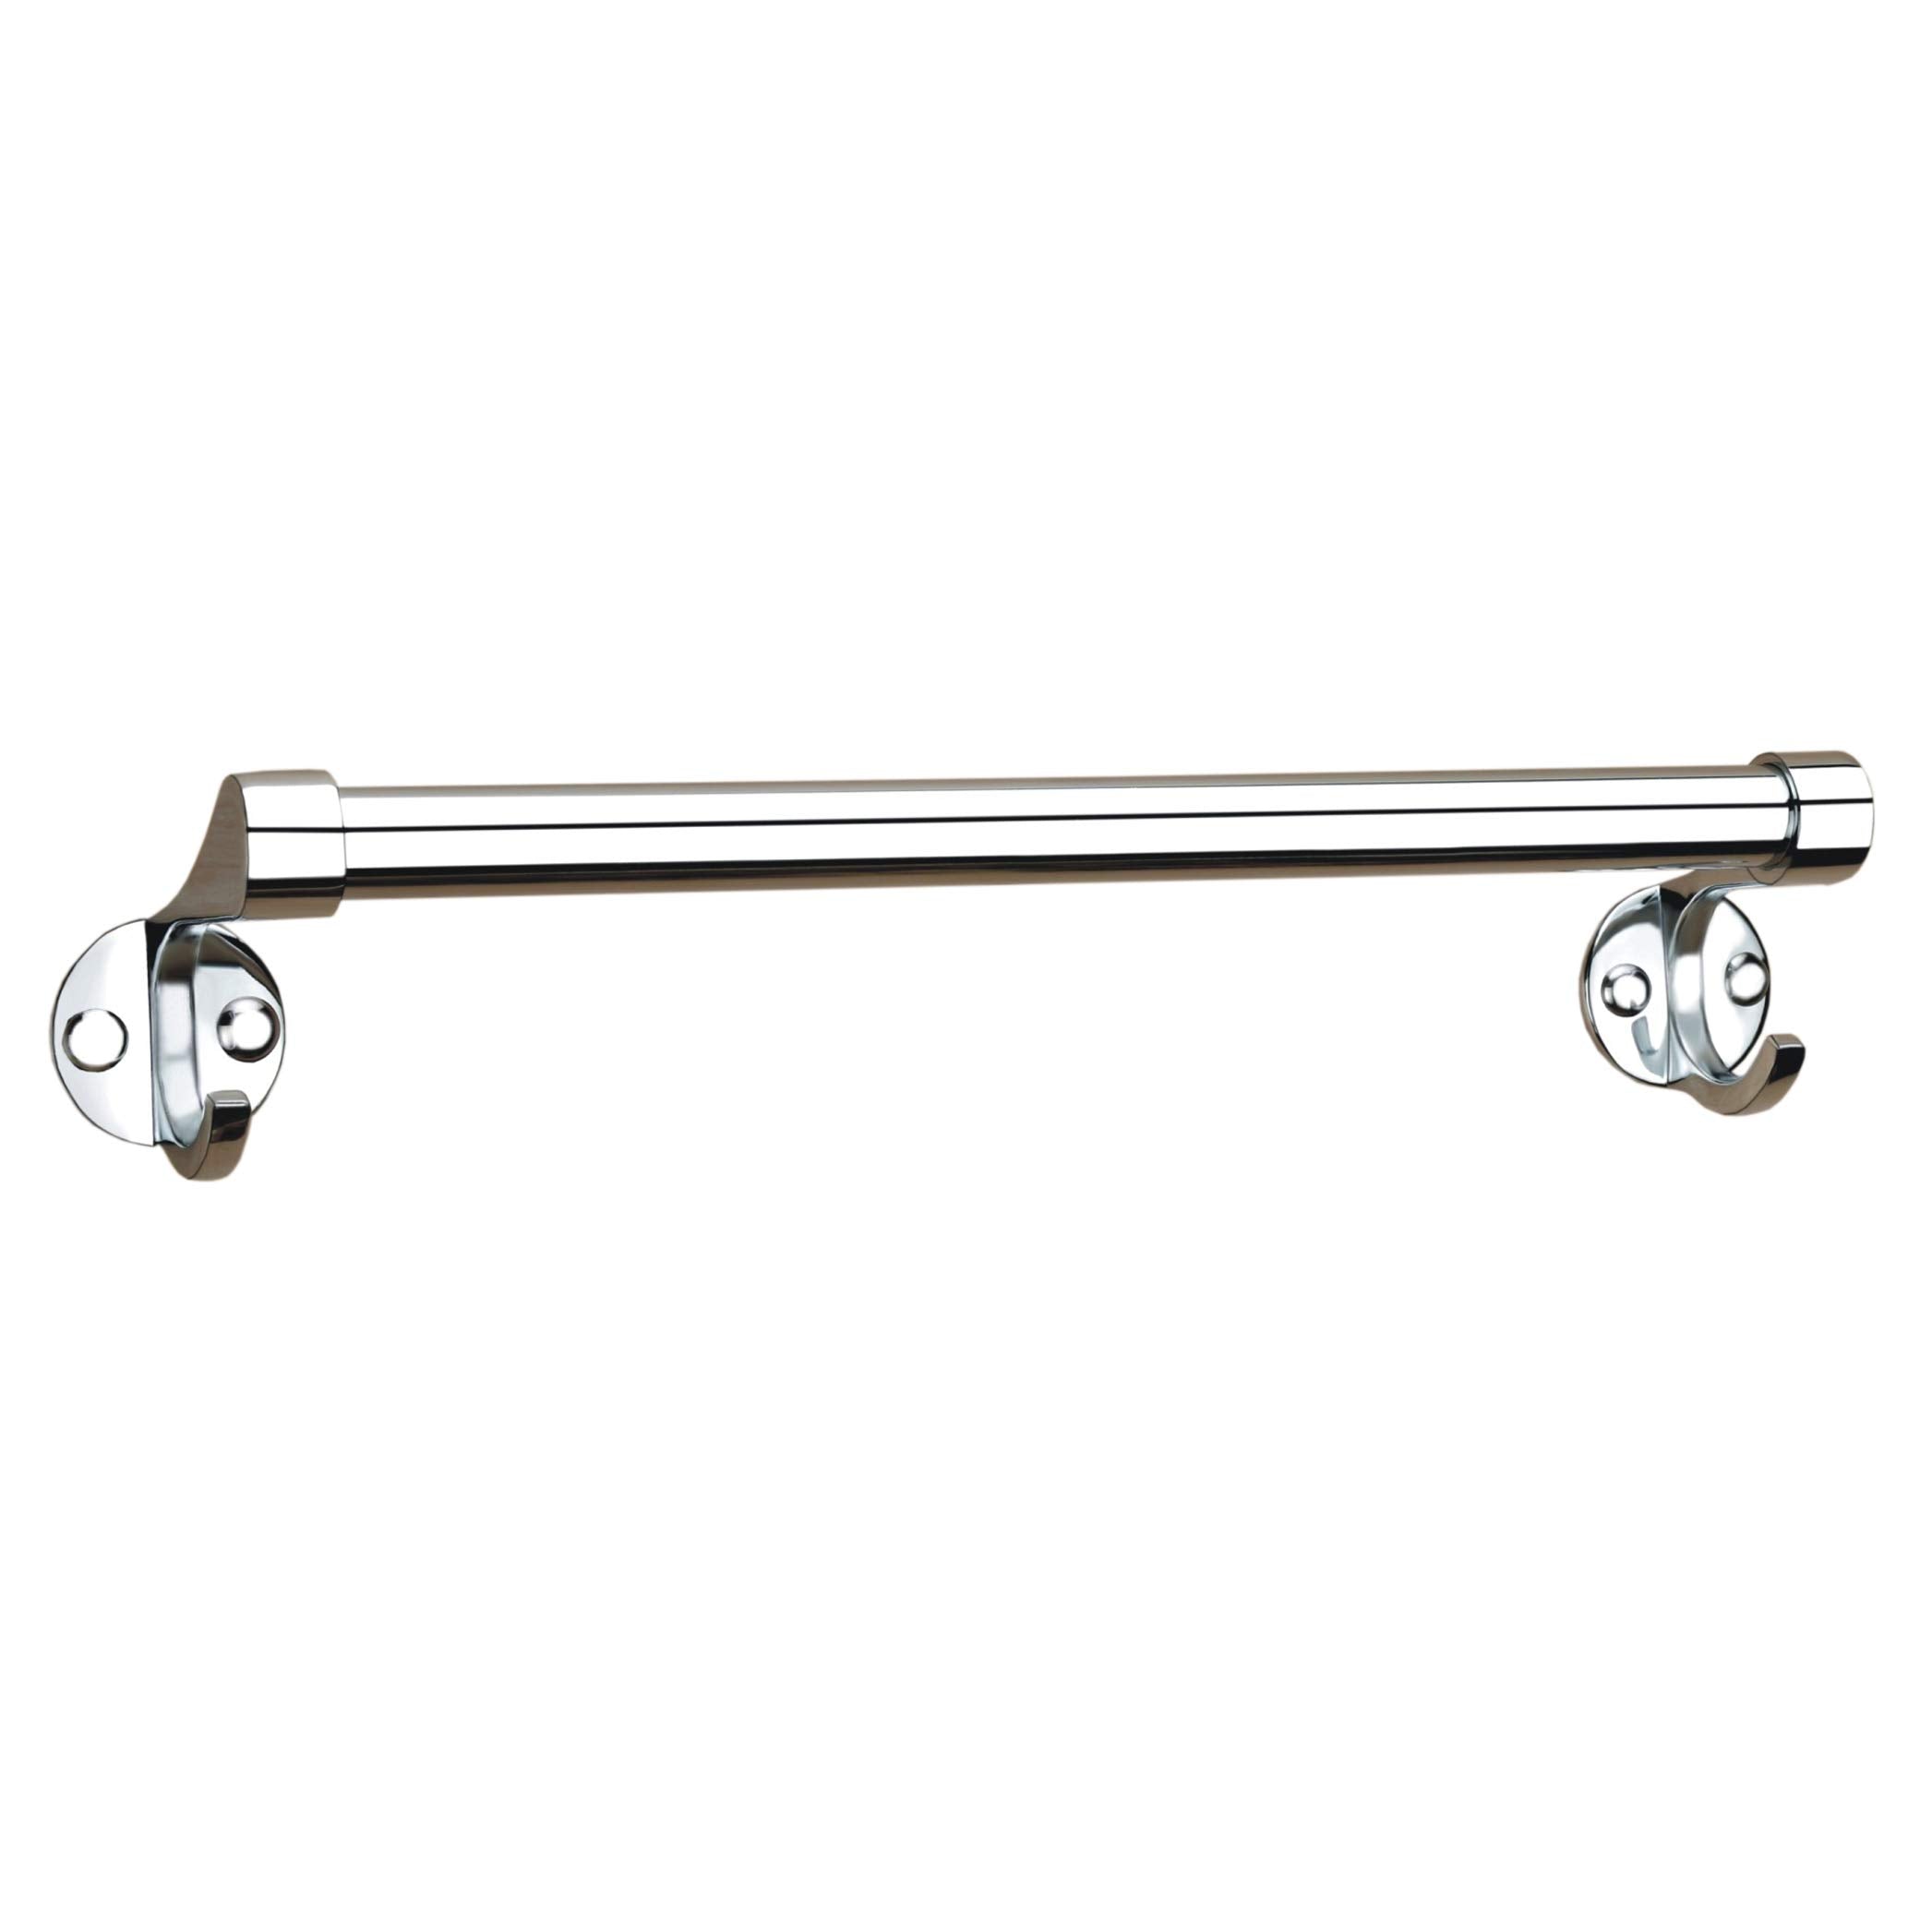 Plantex Stainless Steel Towel Hanger for Bathroom/Towel Rod/Bar/Bathroom Accessories(24 Inch-Chrome)